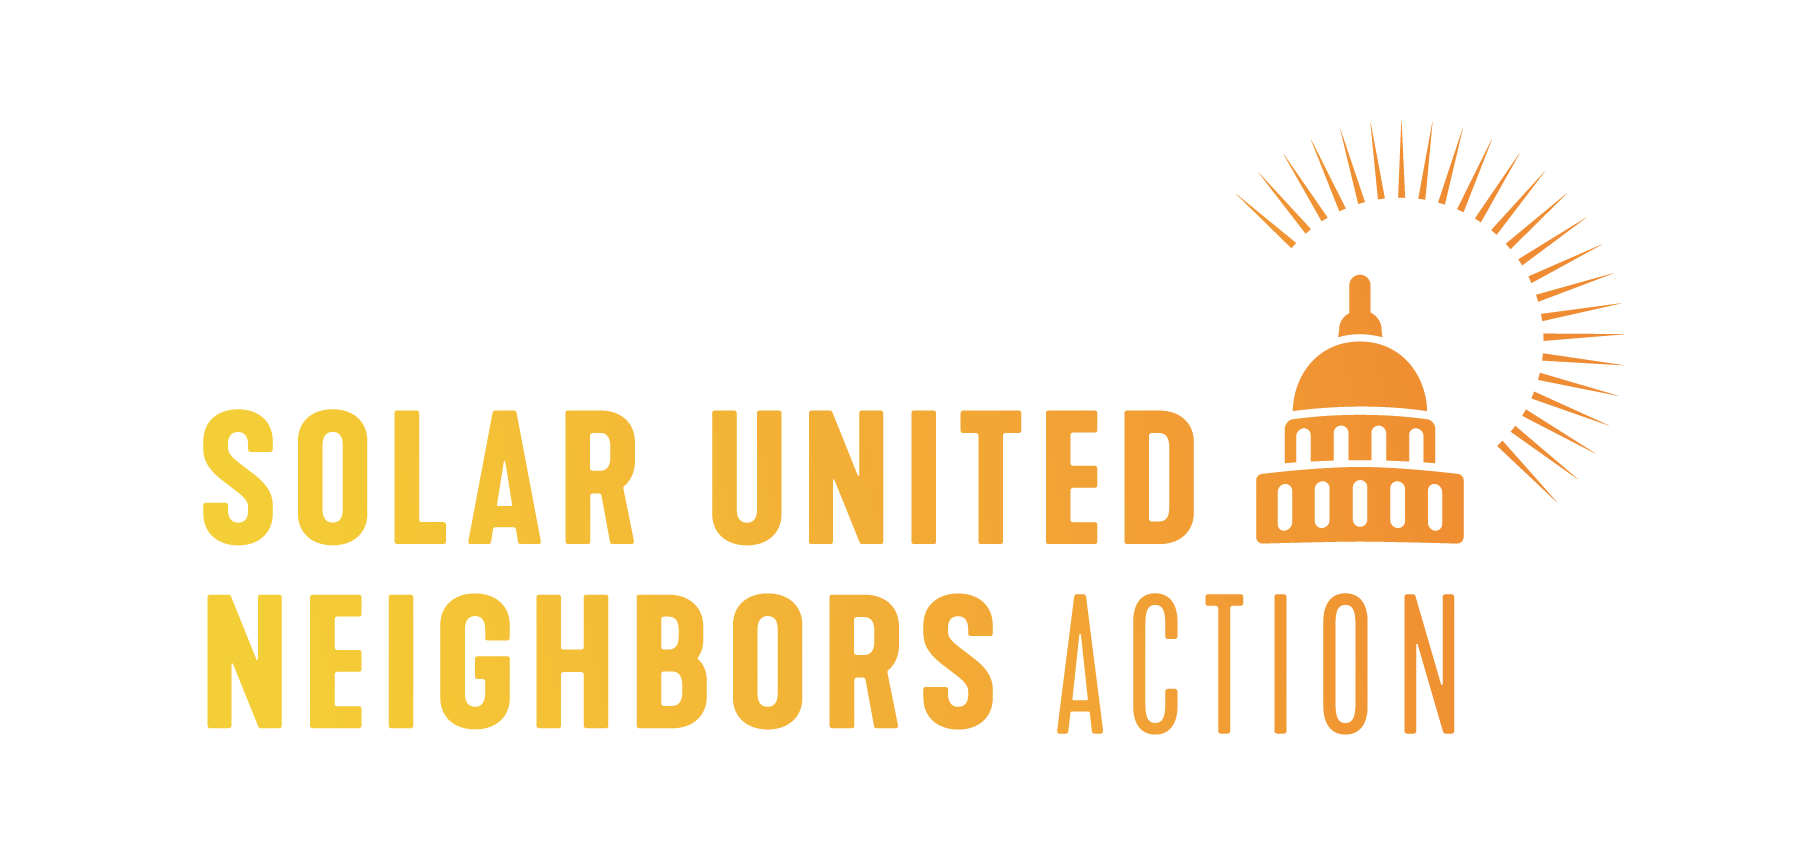 Solar United Neighbors